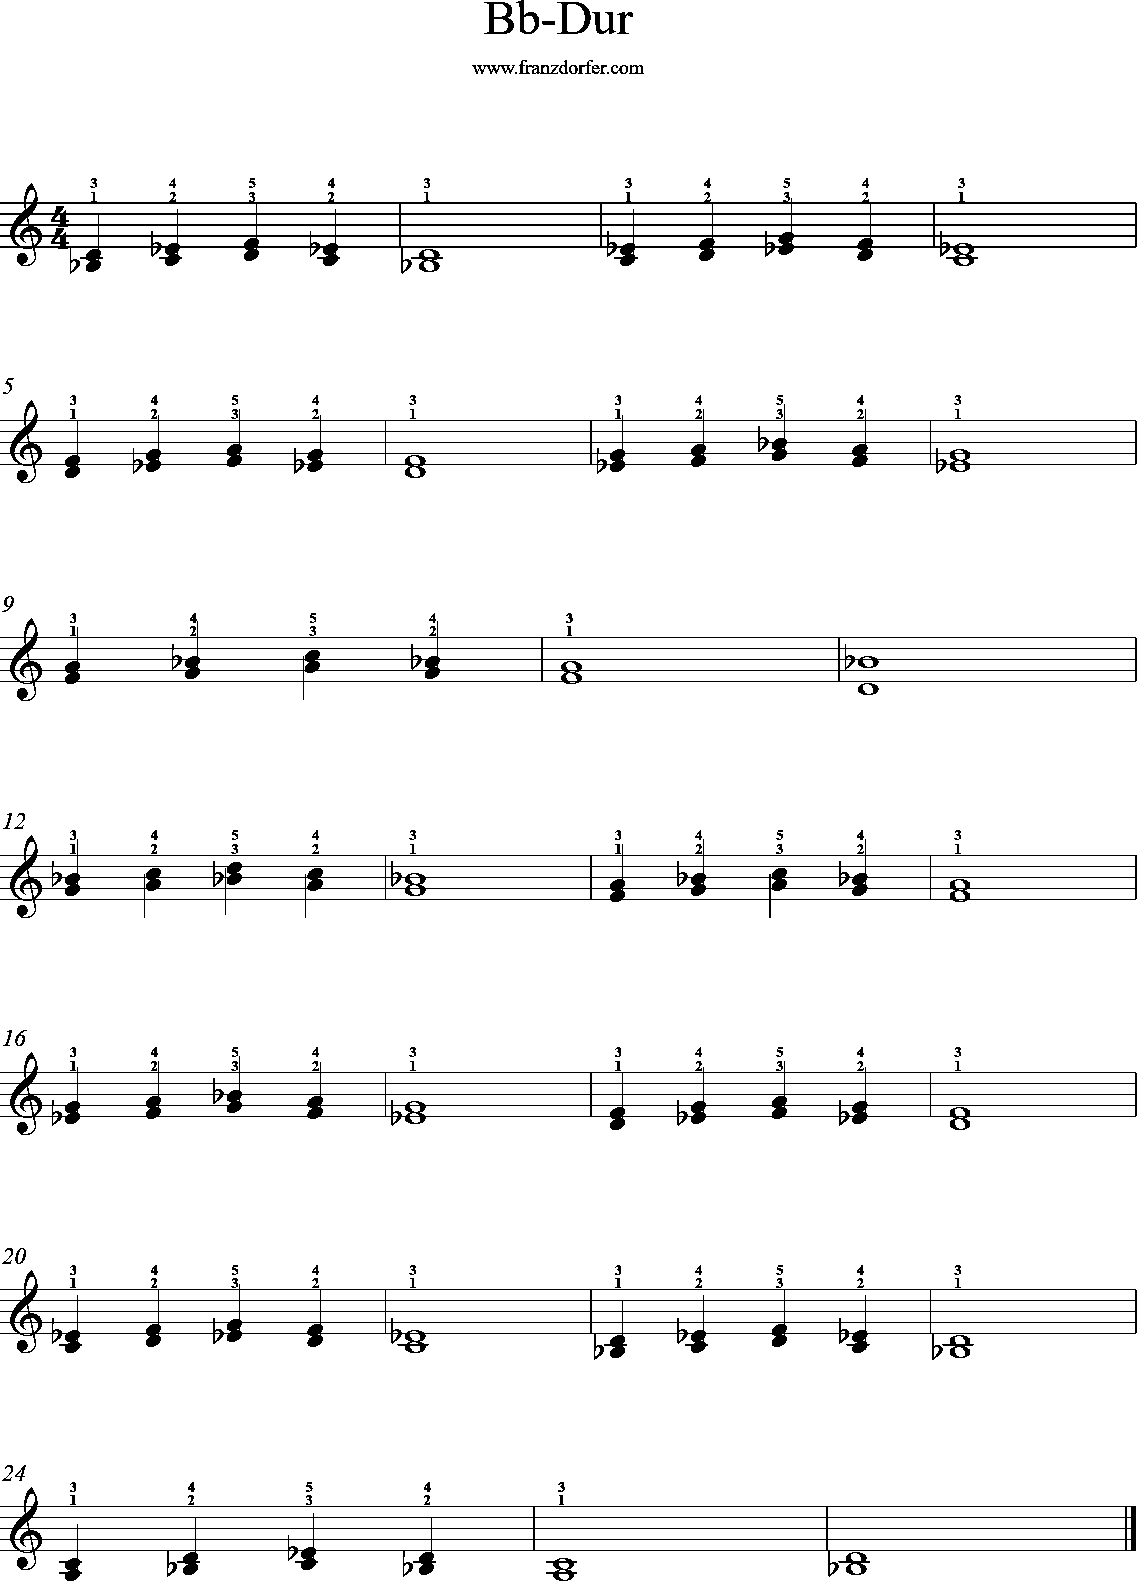 Bb-Dur Tonleiter Akkordeon, Terzen-1